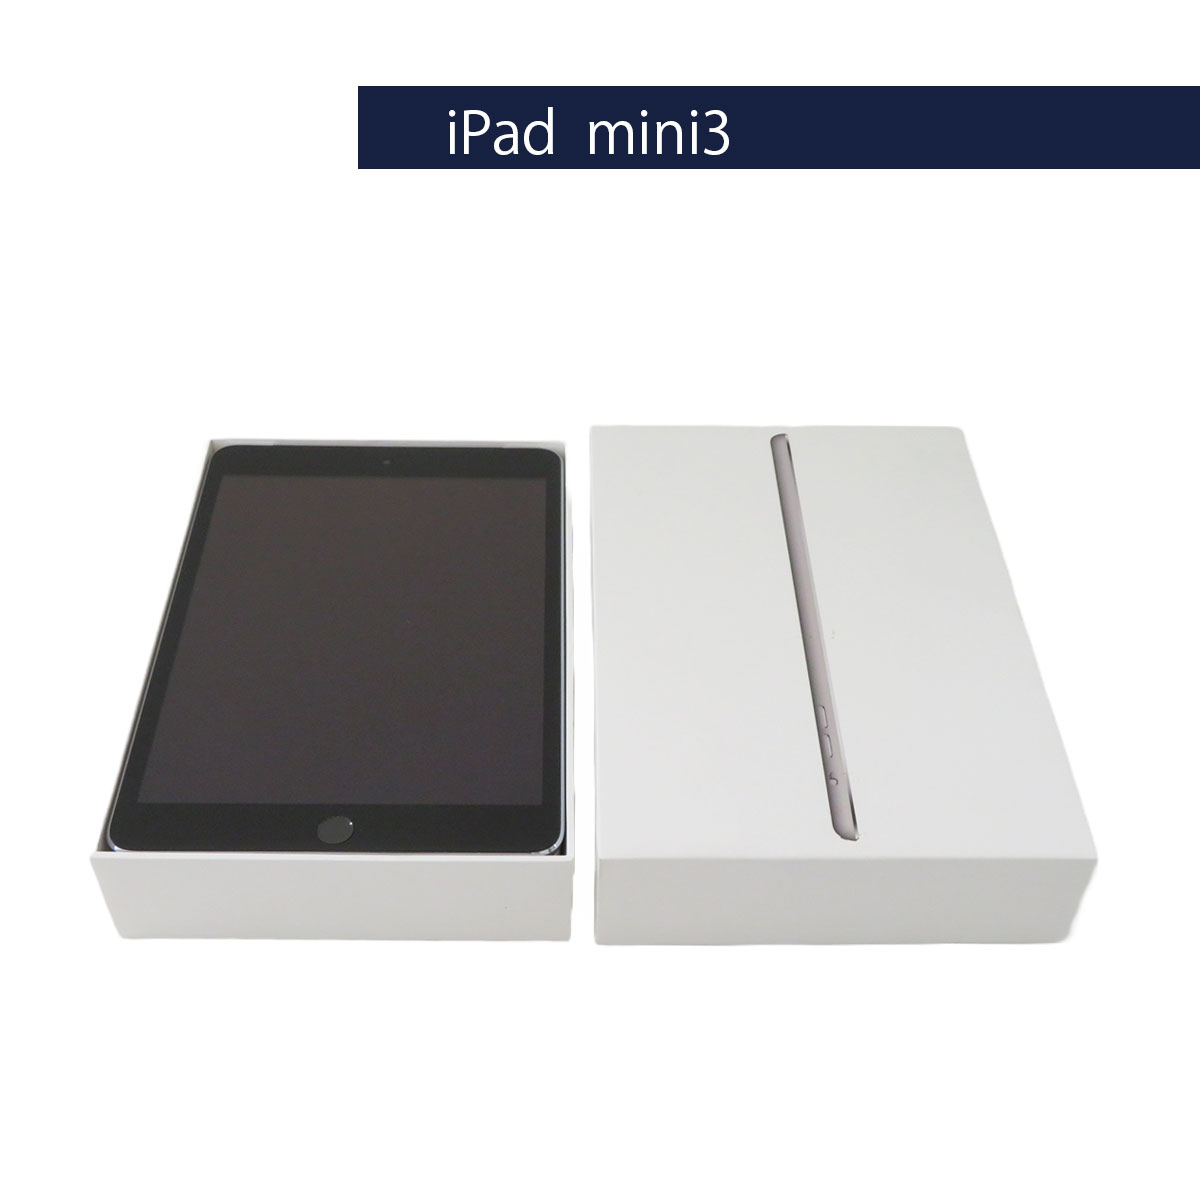 iPad mini3 Apple Wi-Fi Cellular モデル Space Gray MGHV2J/A 16GB